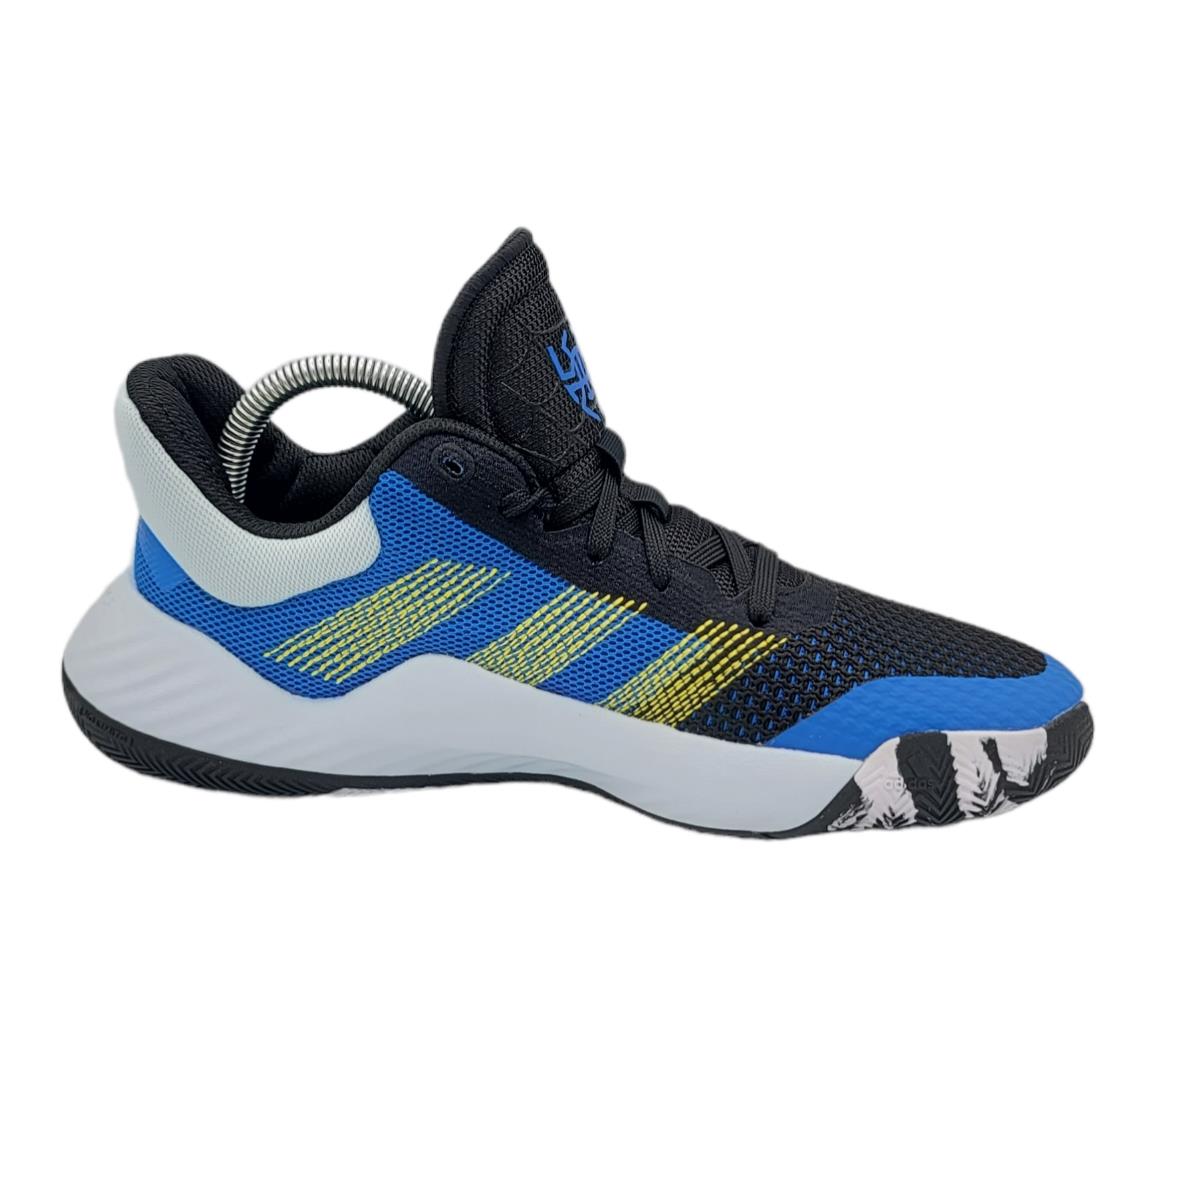 Adidas Basketball Womens Sz 8 Sneakers Black EG6564 Boys Size 6.5